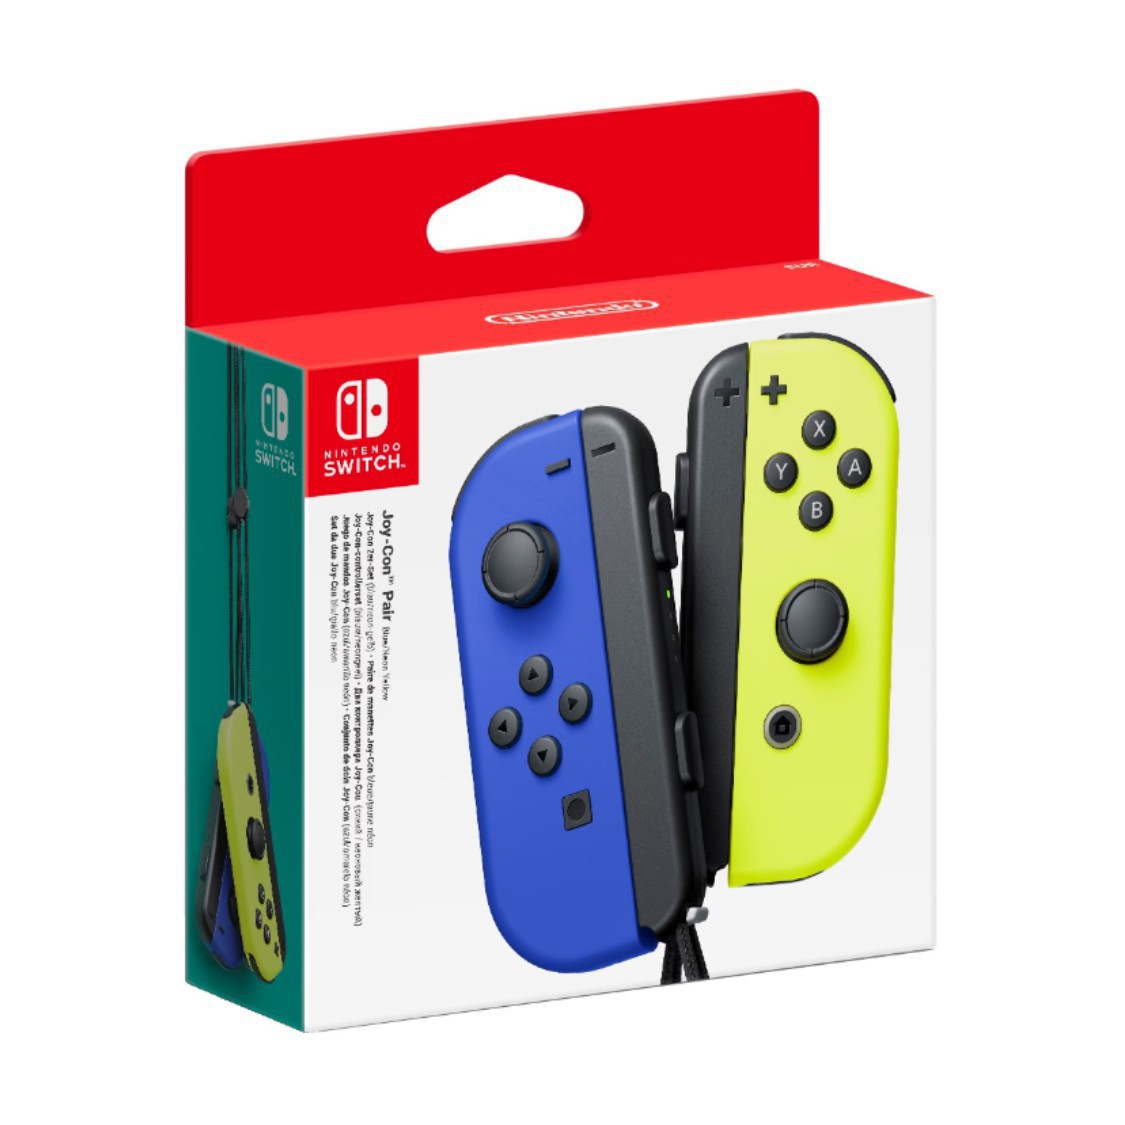 Nintendo Switch Joy-Con Controllers - Blauw/Geel [Complete] Kopen | Nintendo Switch Hardware